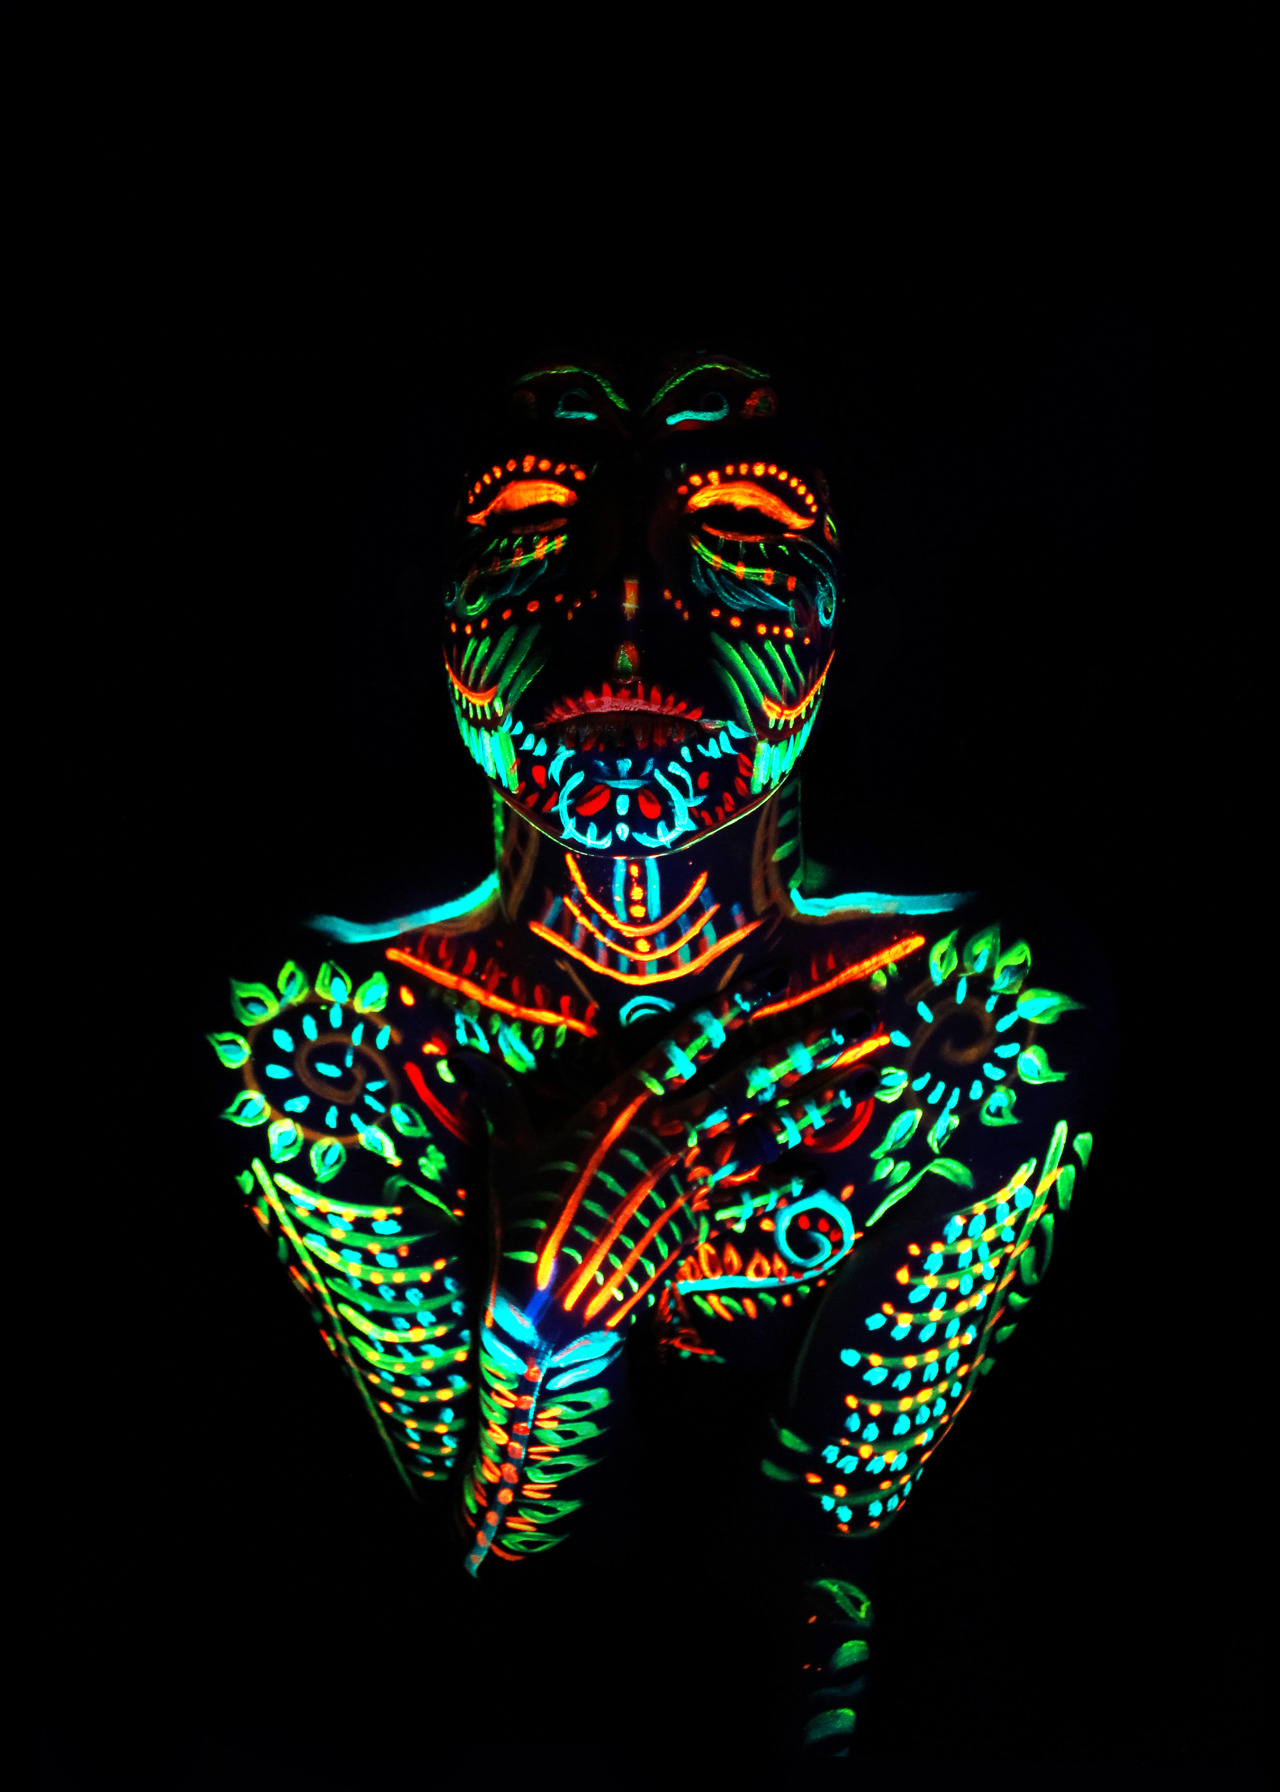 Mönstrifer — Fluorescent body paint + uv light. 🌌 More of my